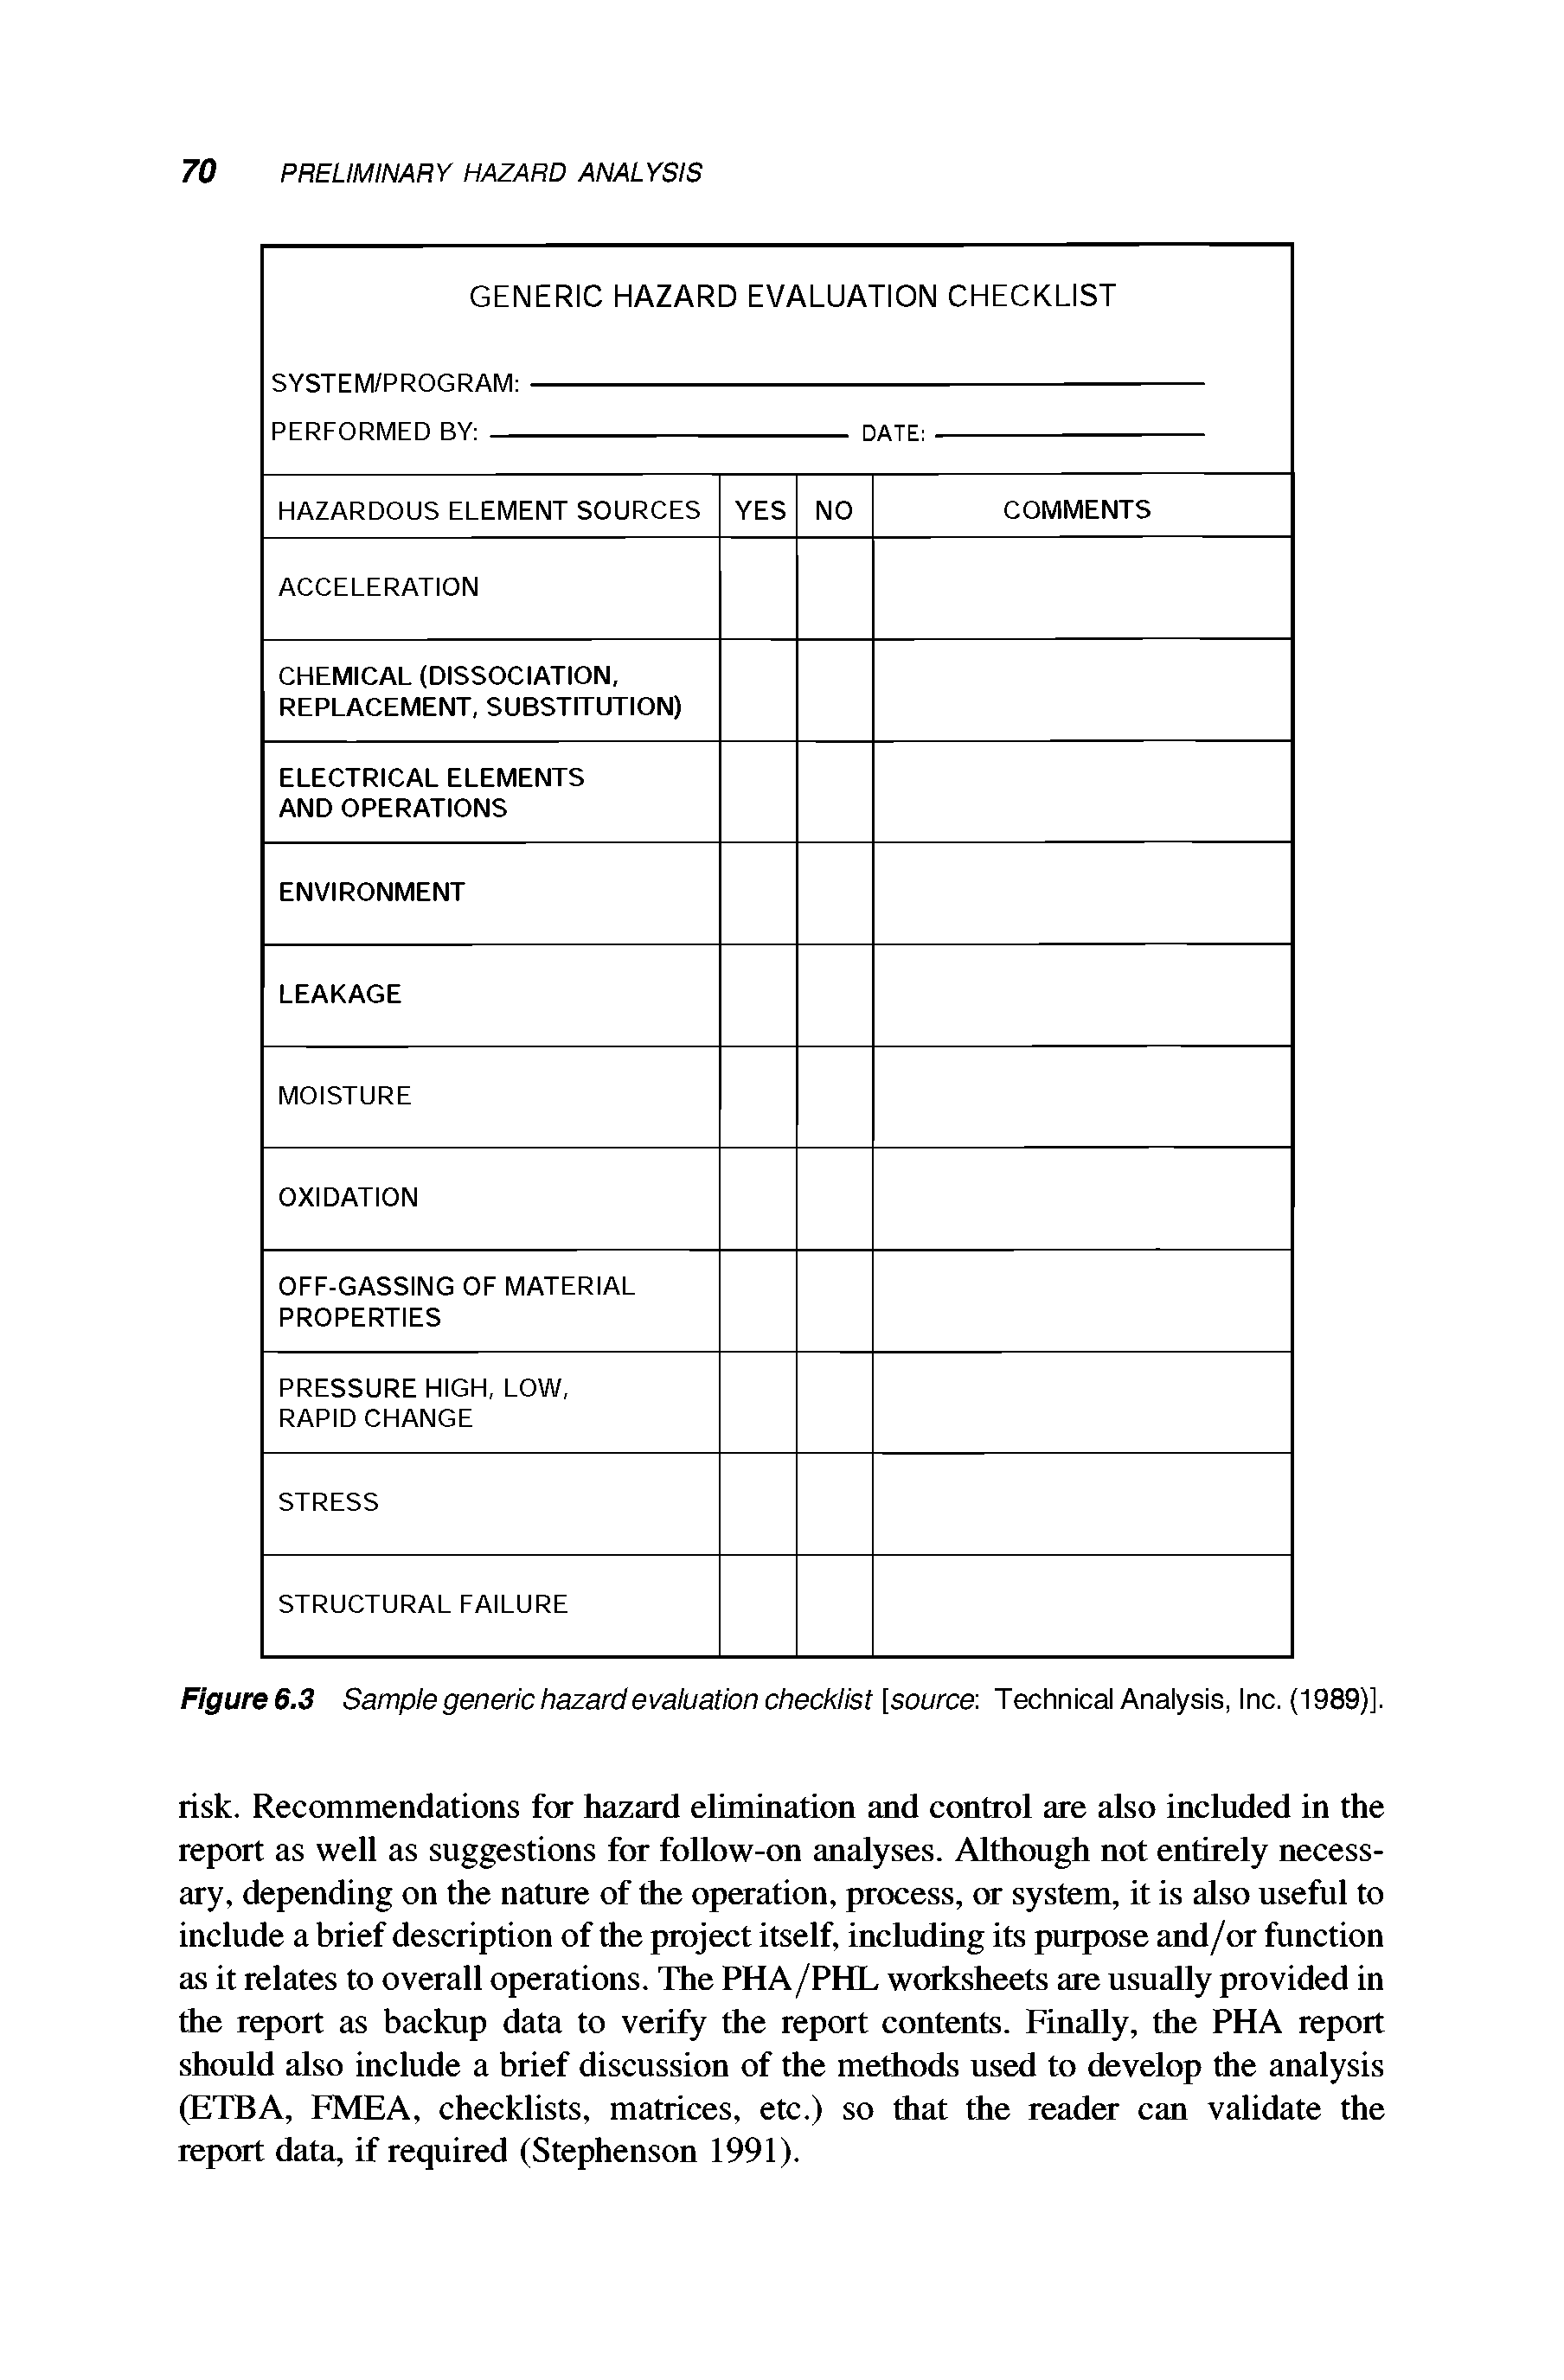 Figure6.3 Sample generic hazard evaluation checklist [source. Technical Analysis, Inc. (1989)].